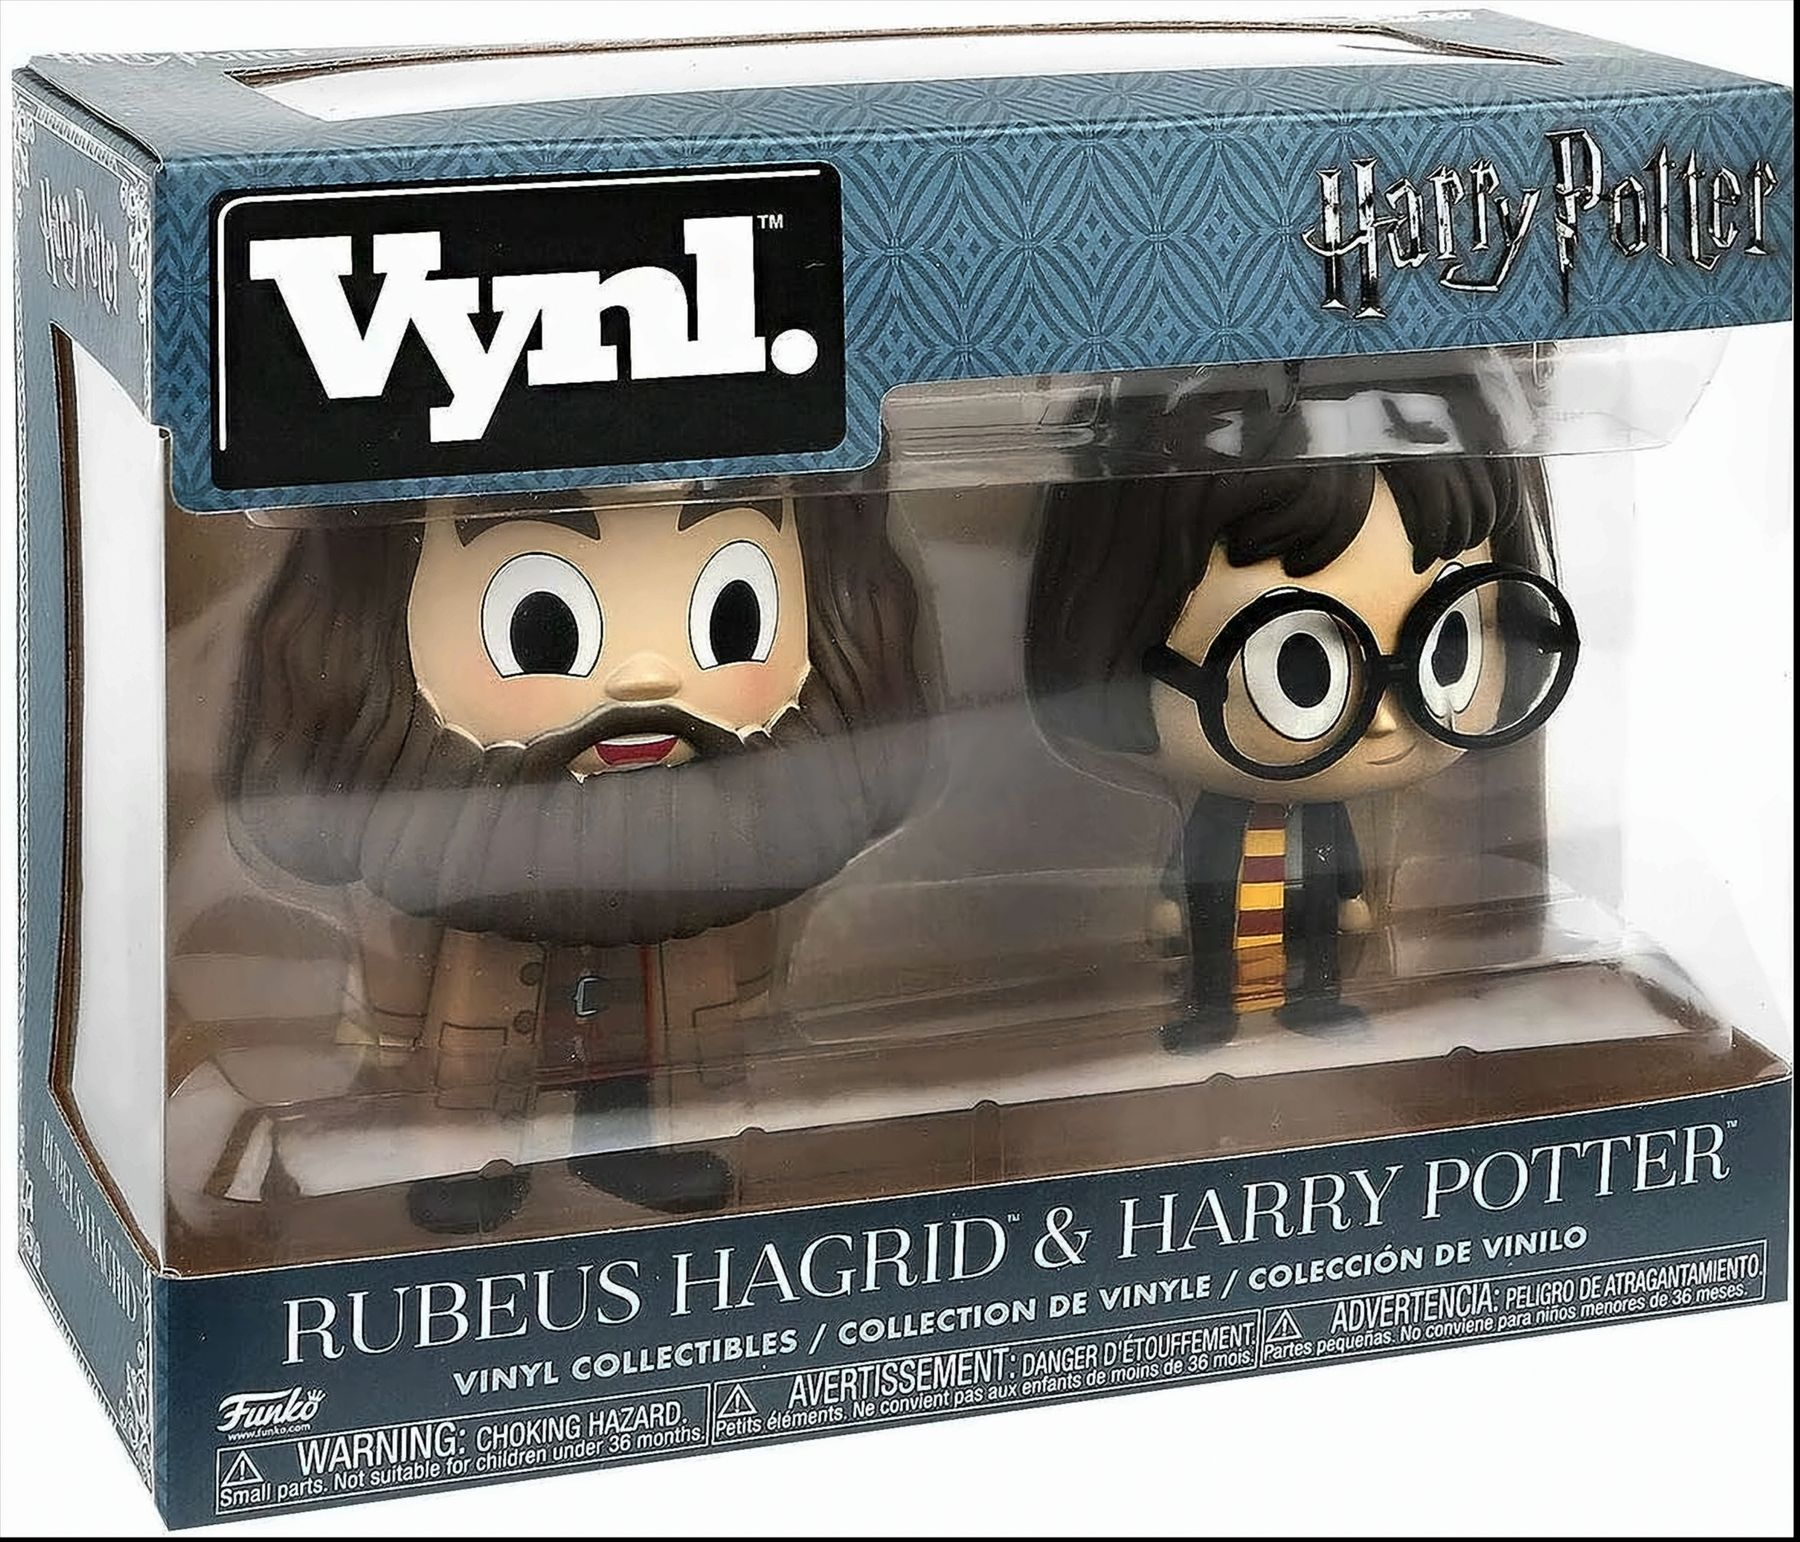 Potter Hagrid Rubeus Harry - Vynl. Harry & Potter